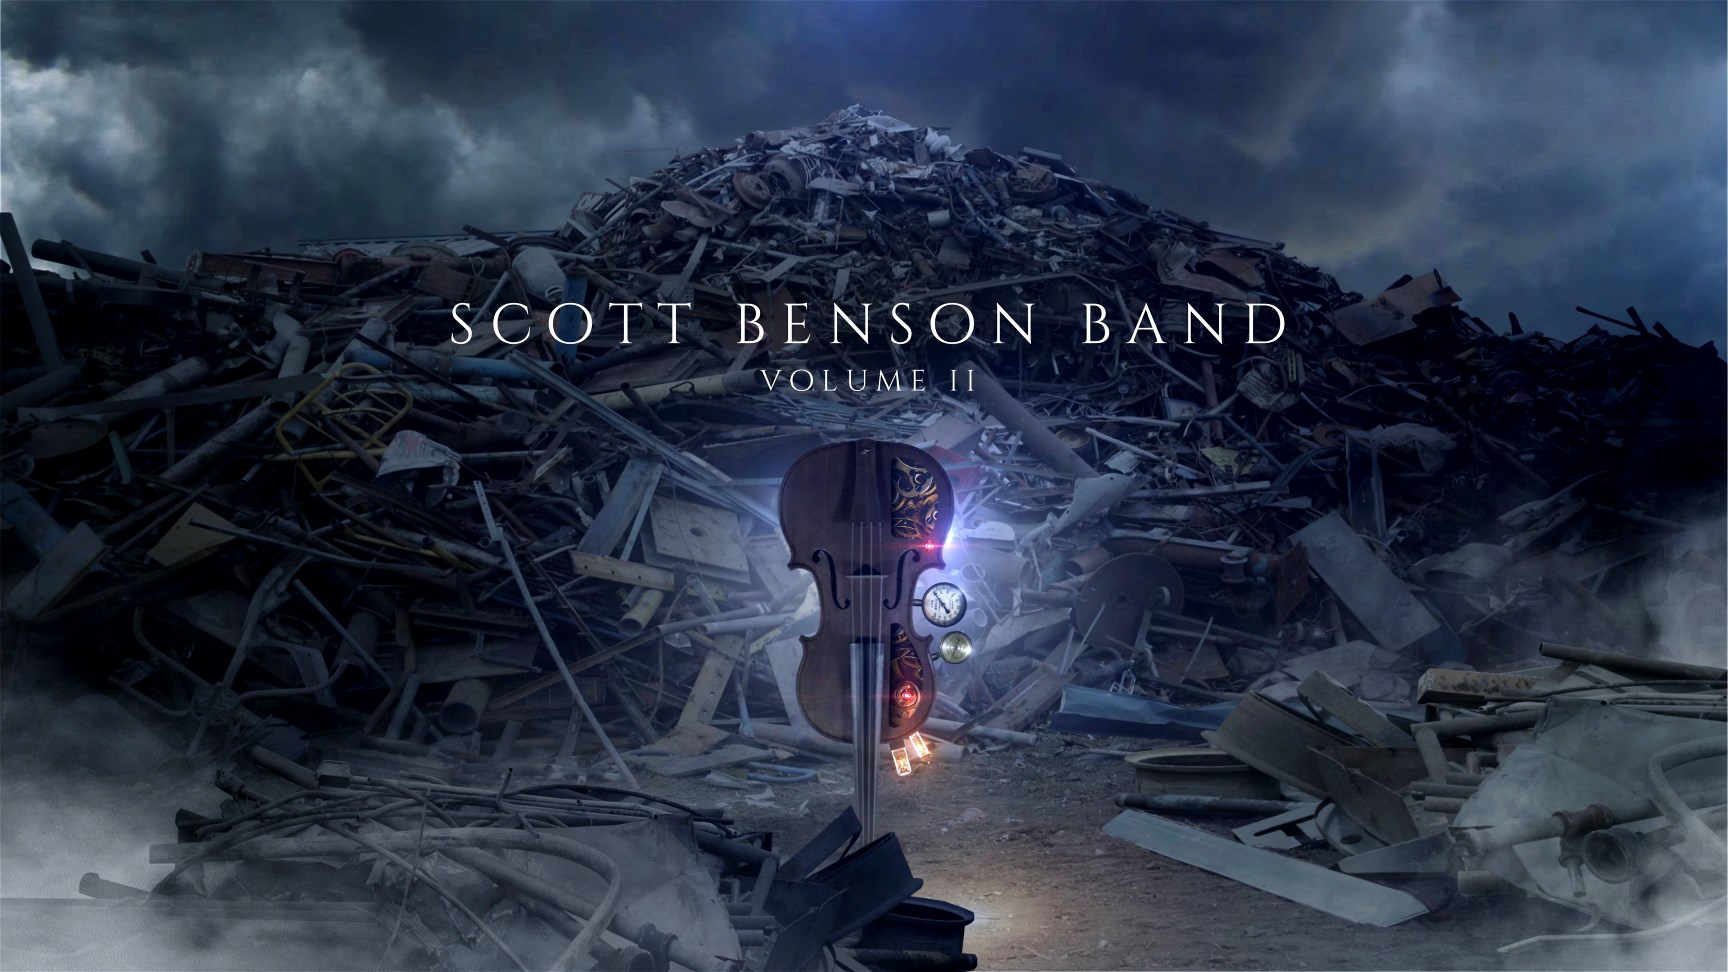 SCOTT BENSON BAND - VOLUME II